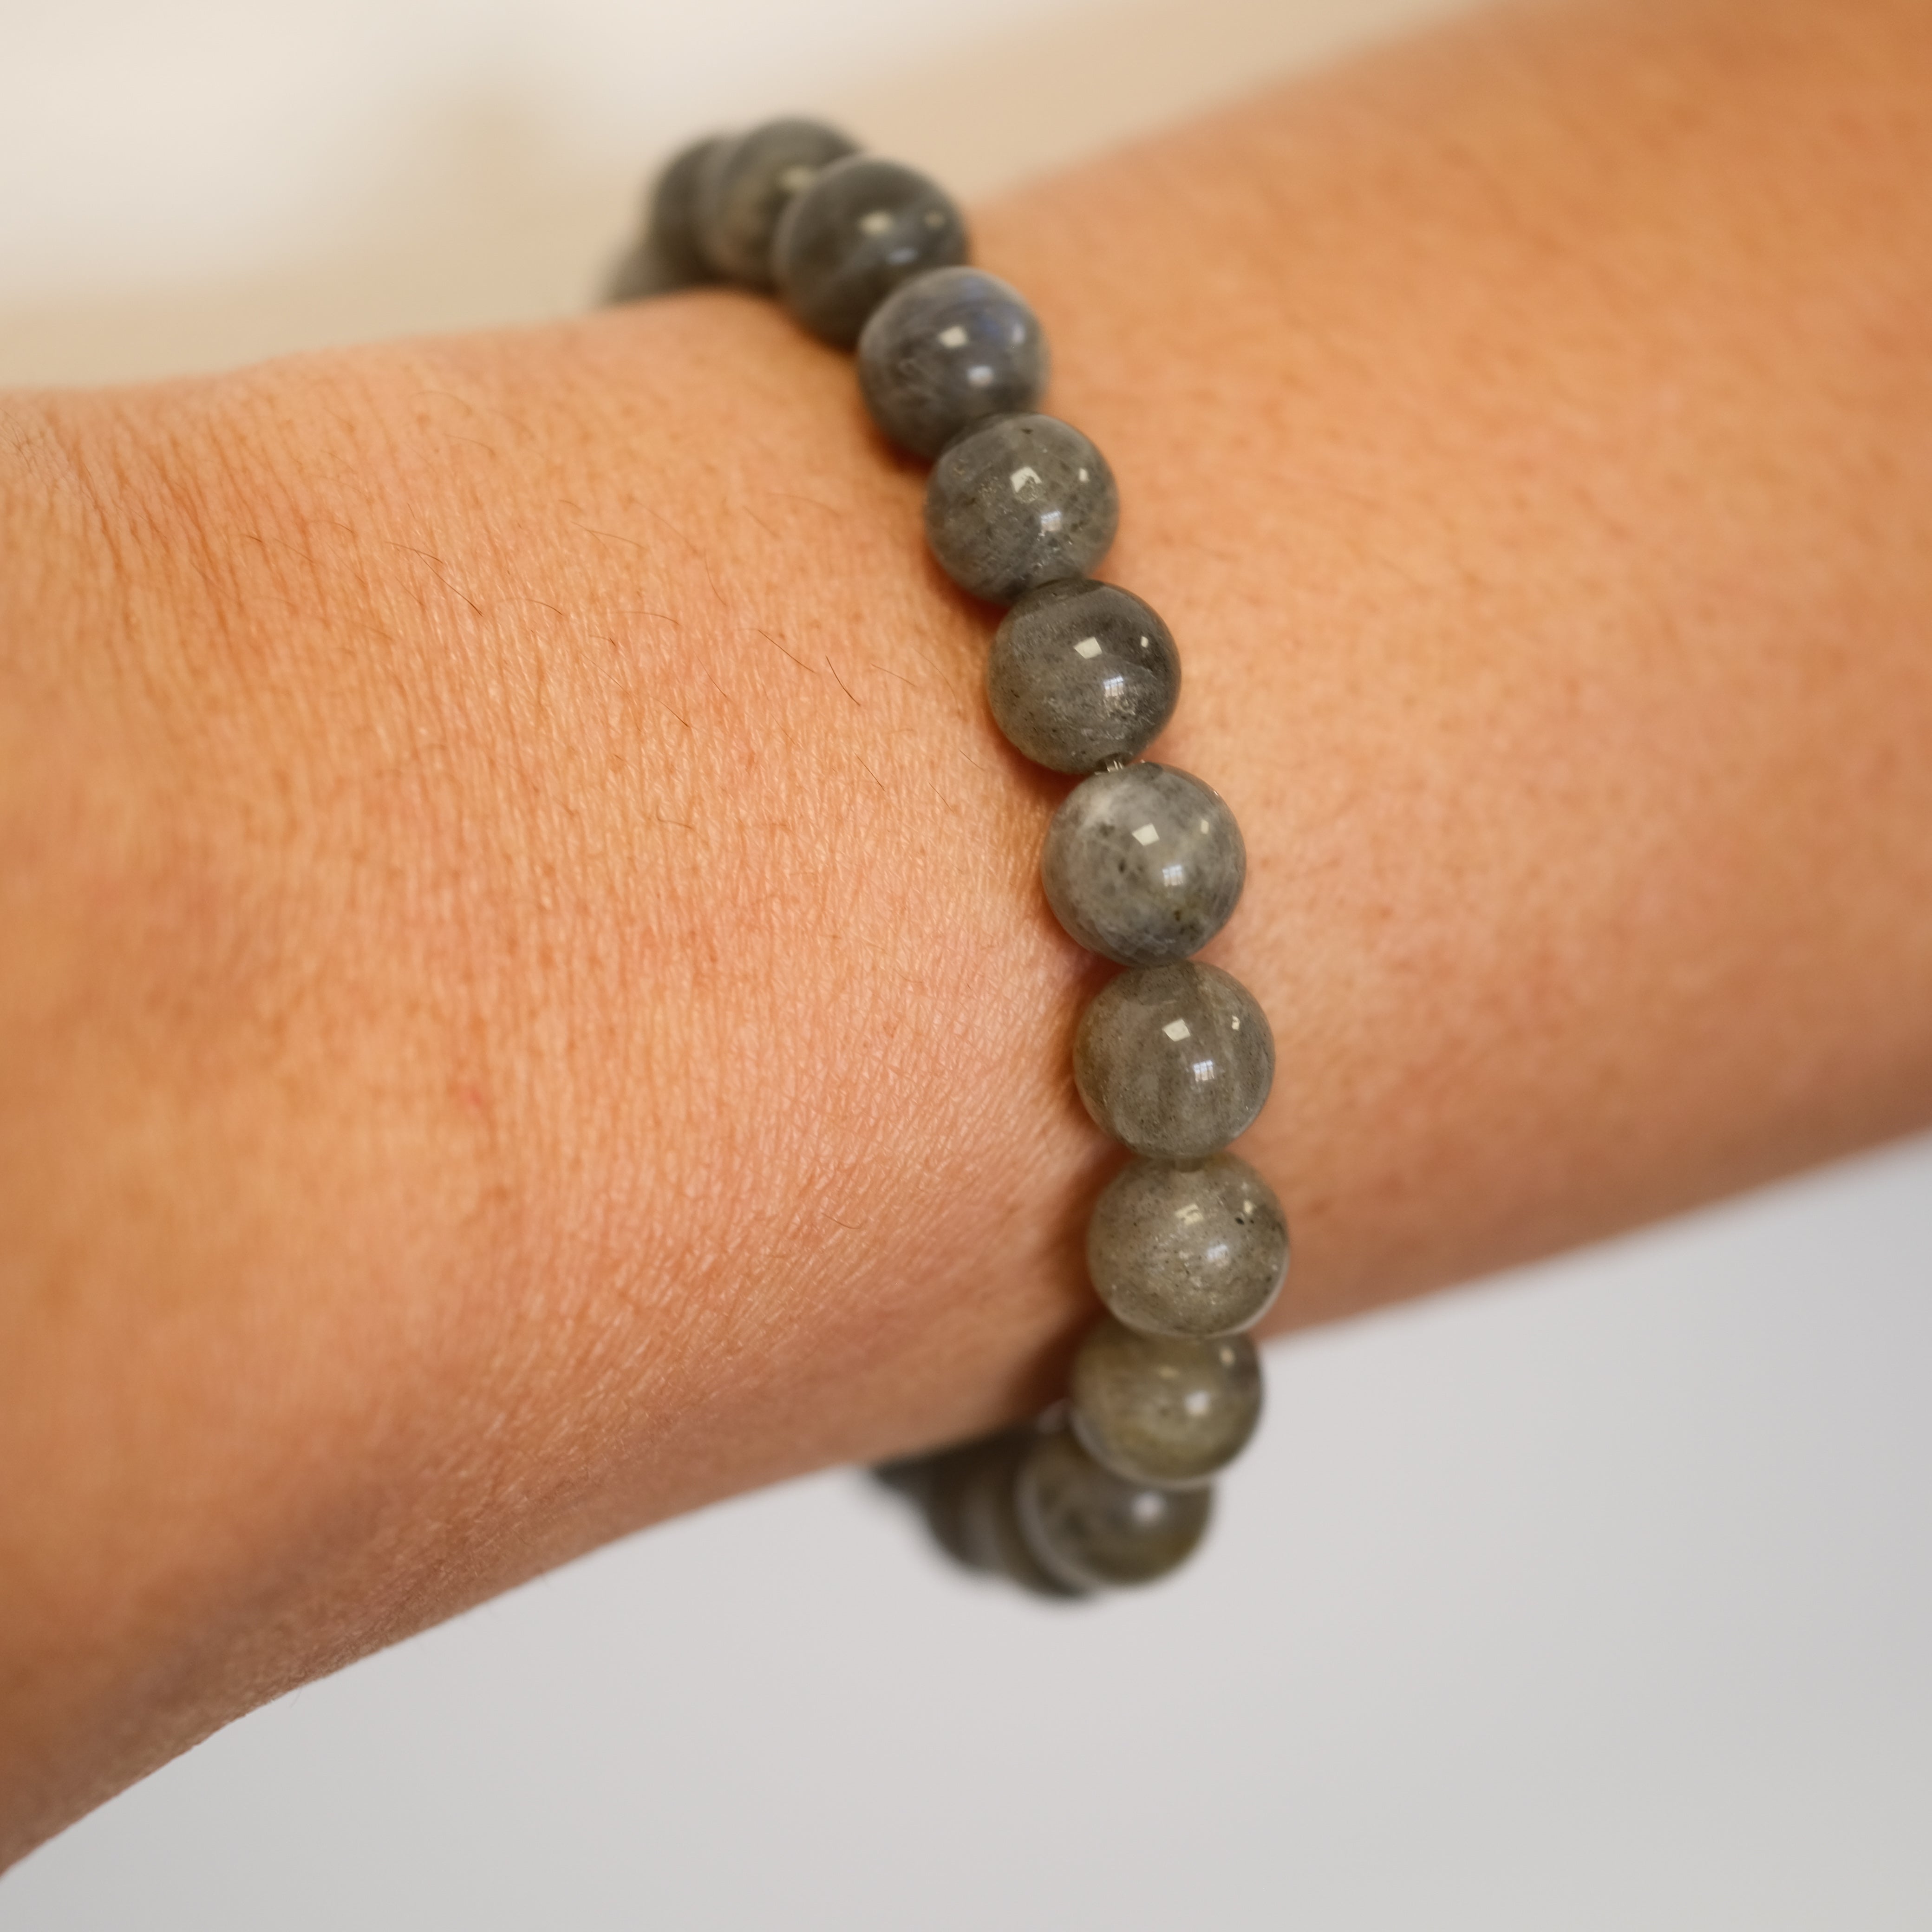 Labradorite gemstone bracelet worn on a model's wrist